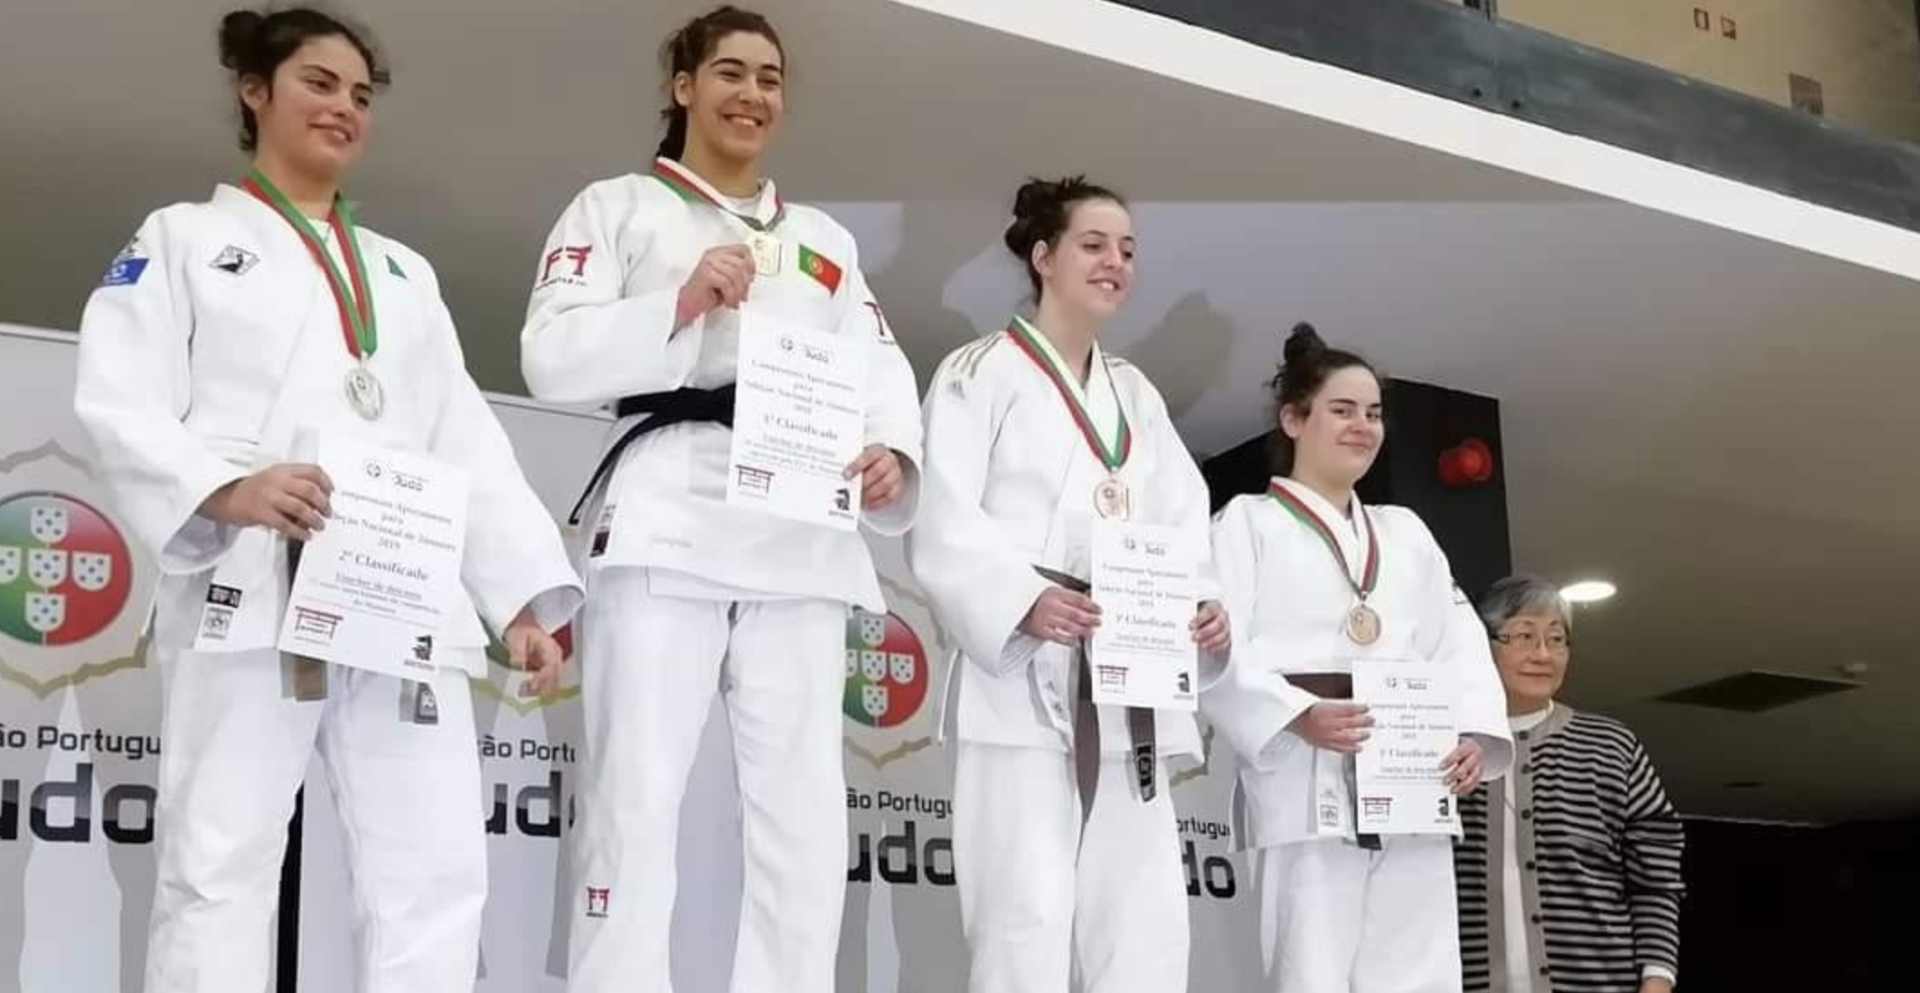 Judoca portuguesa sagra-se bicampeã europeia de juniores